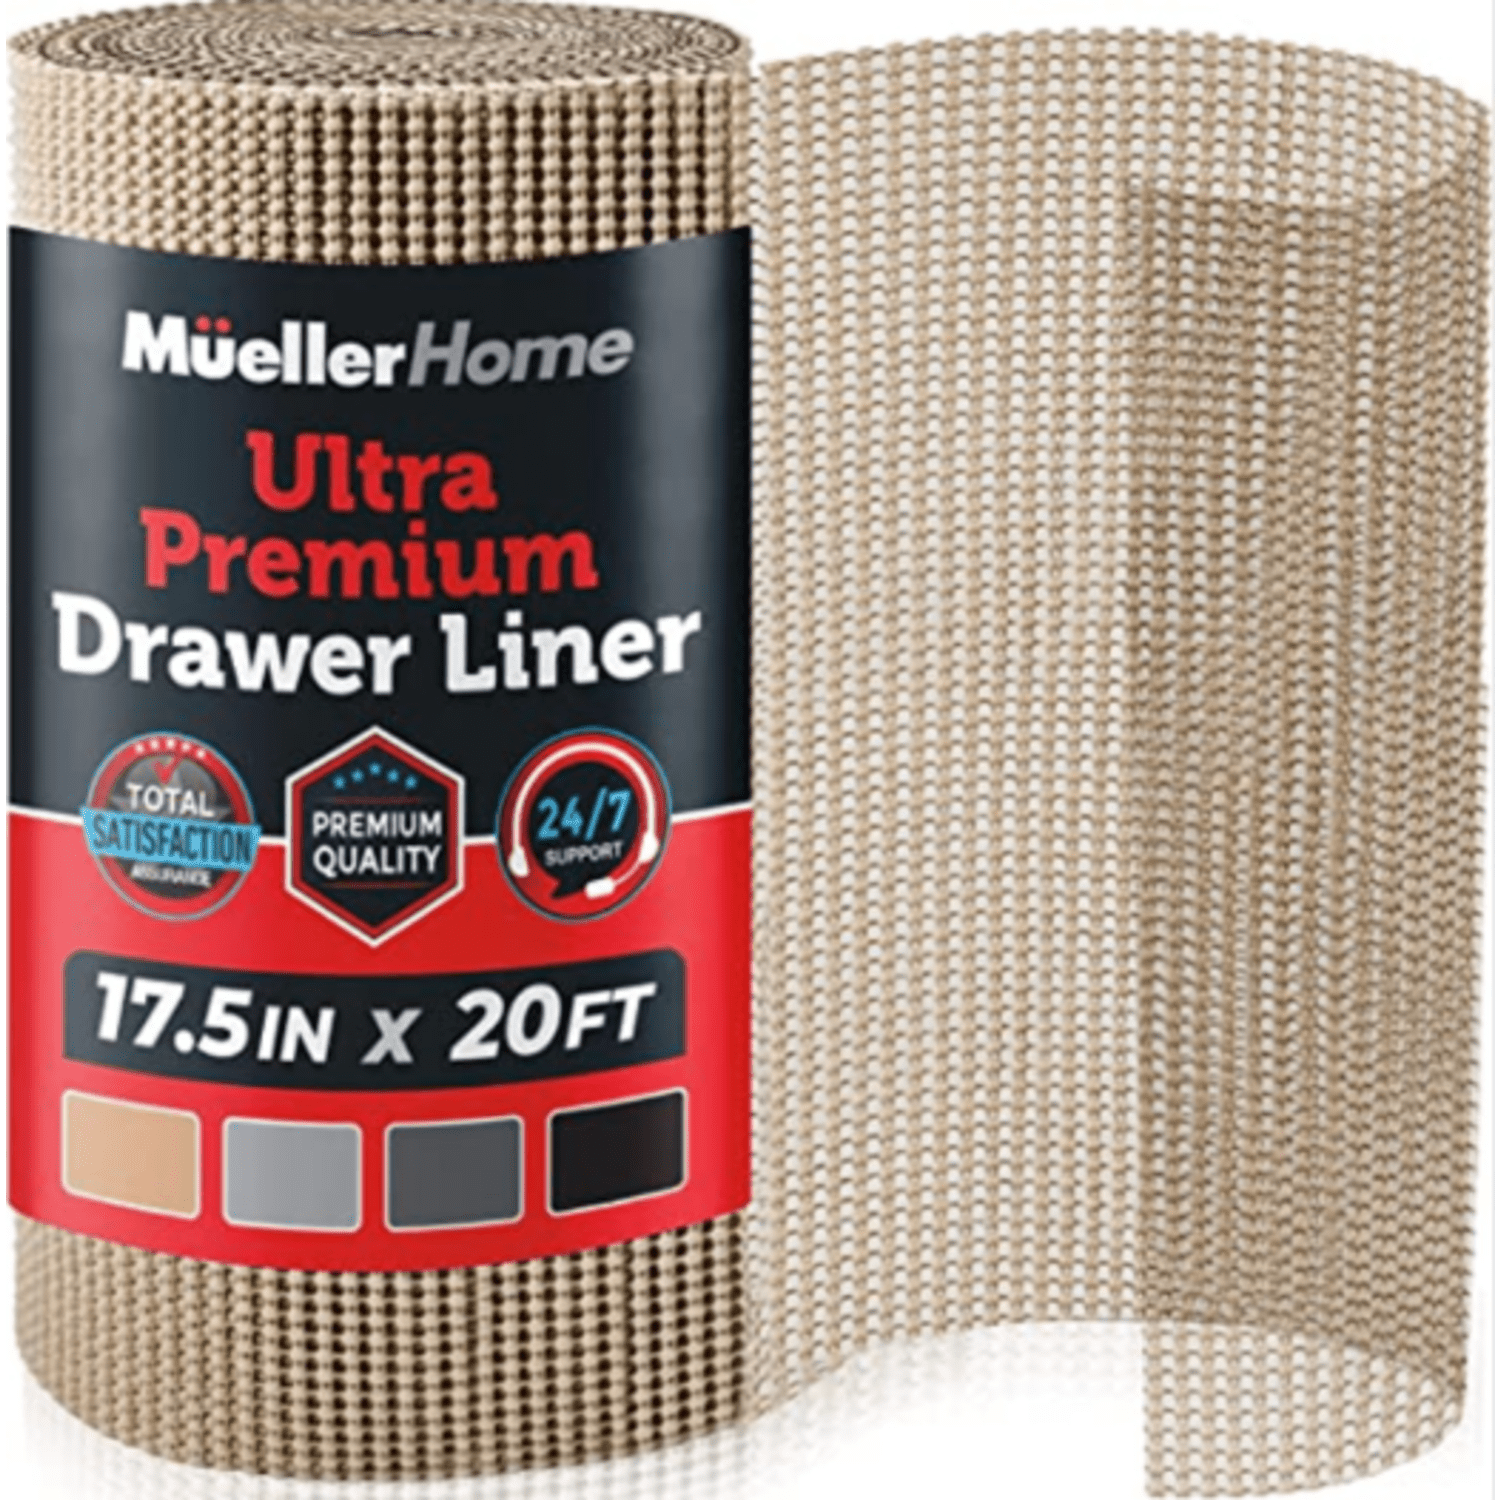 muellerhome_Ultra-Premium-Drawer-Liner-17.5in-x-20ft-Beige